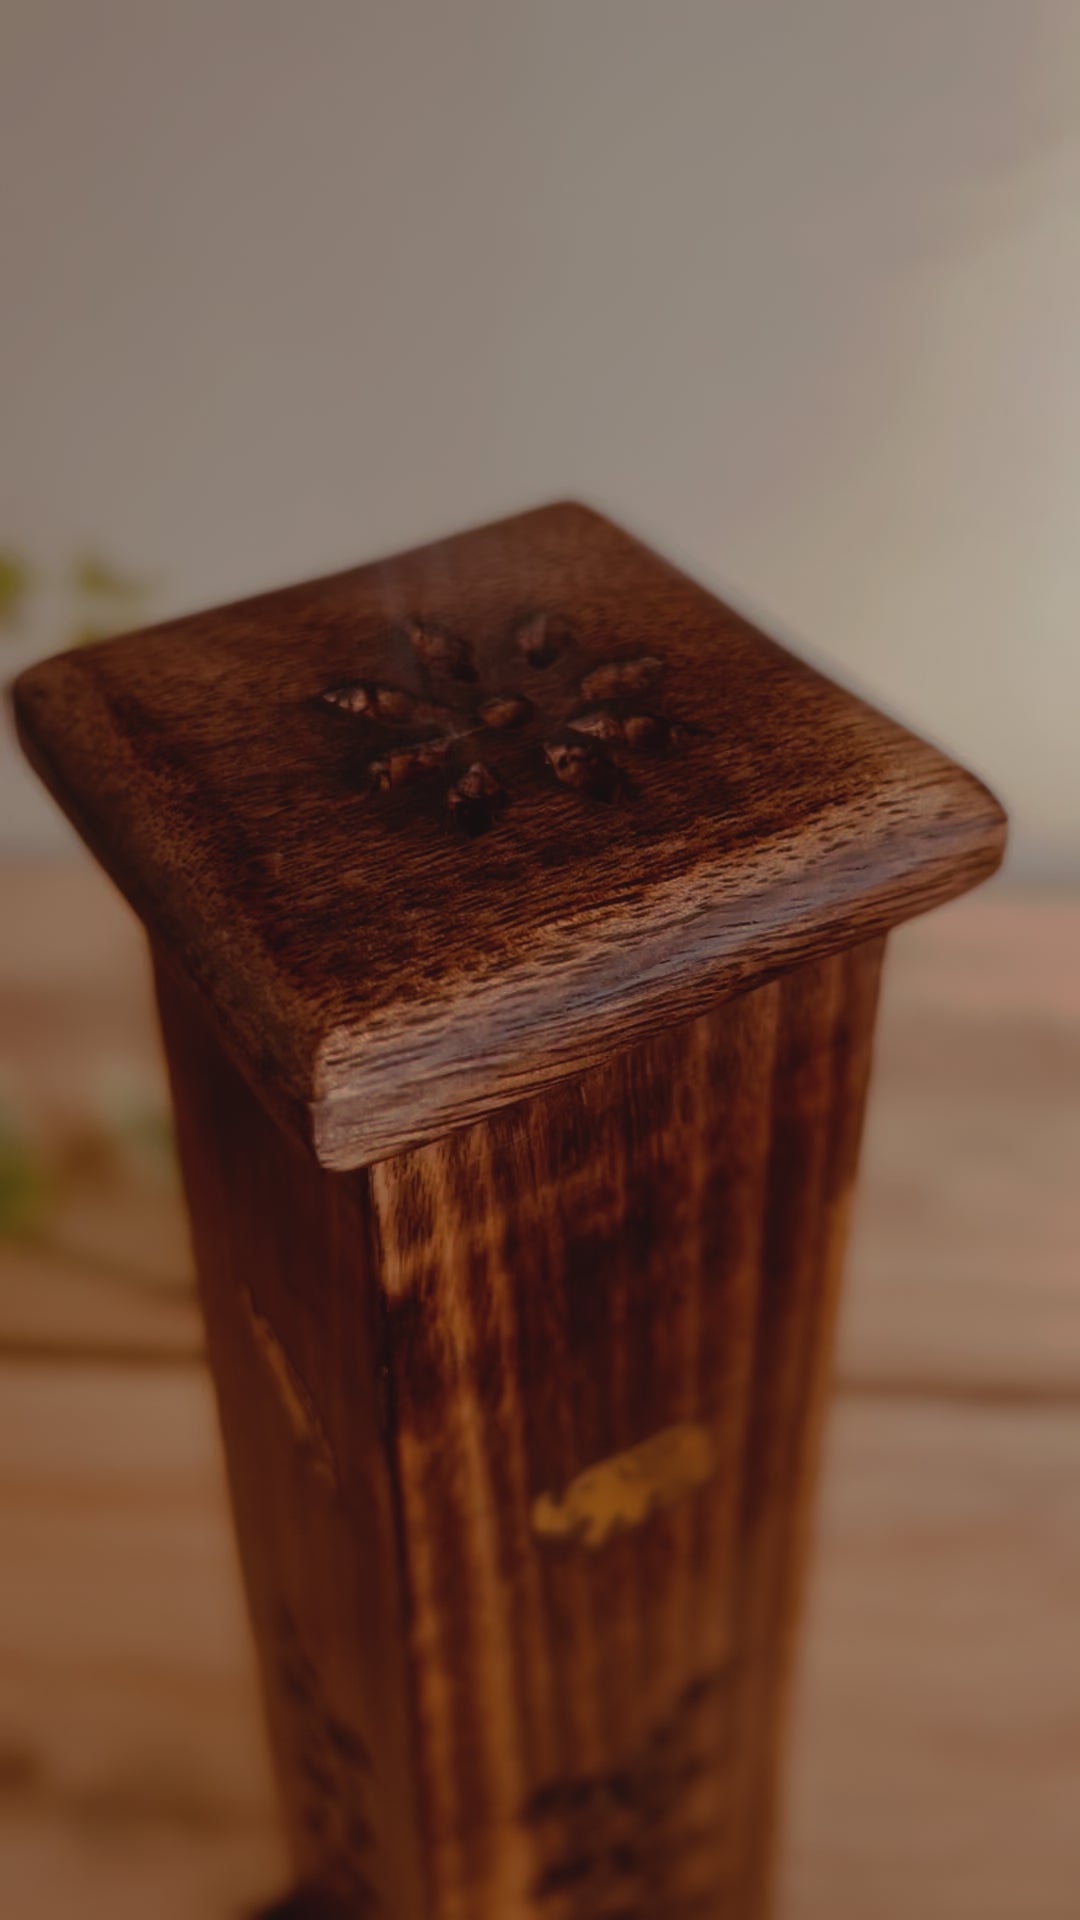 Fair trade wooden incense burner tower